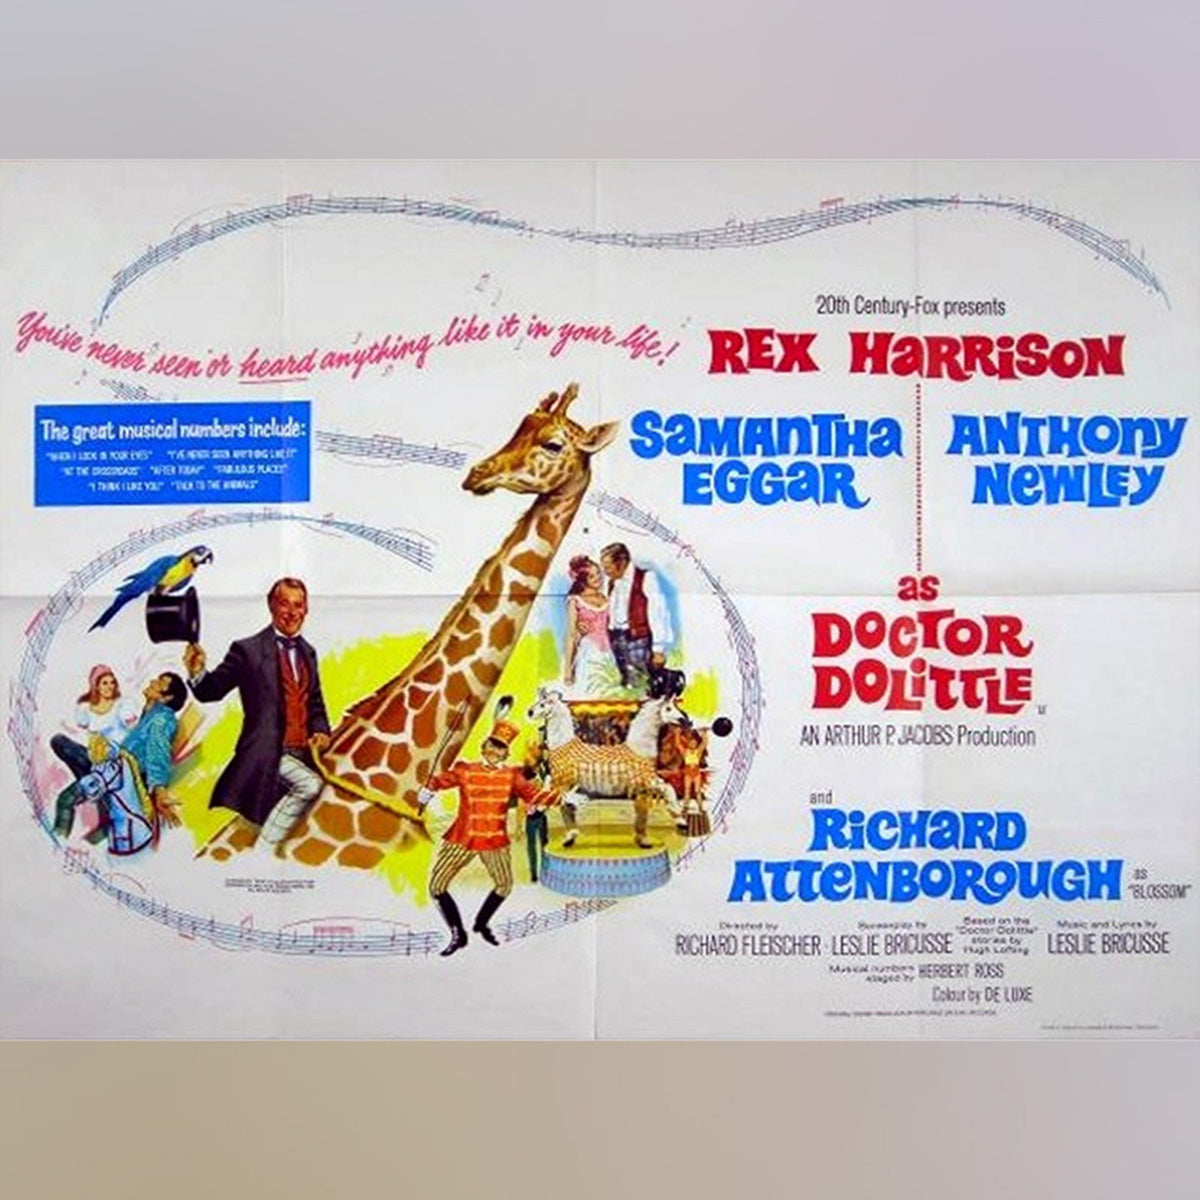 Original Movie Poster of Doctor Dolittle (1967)